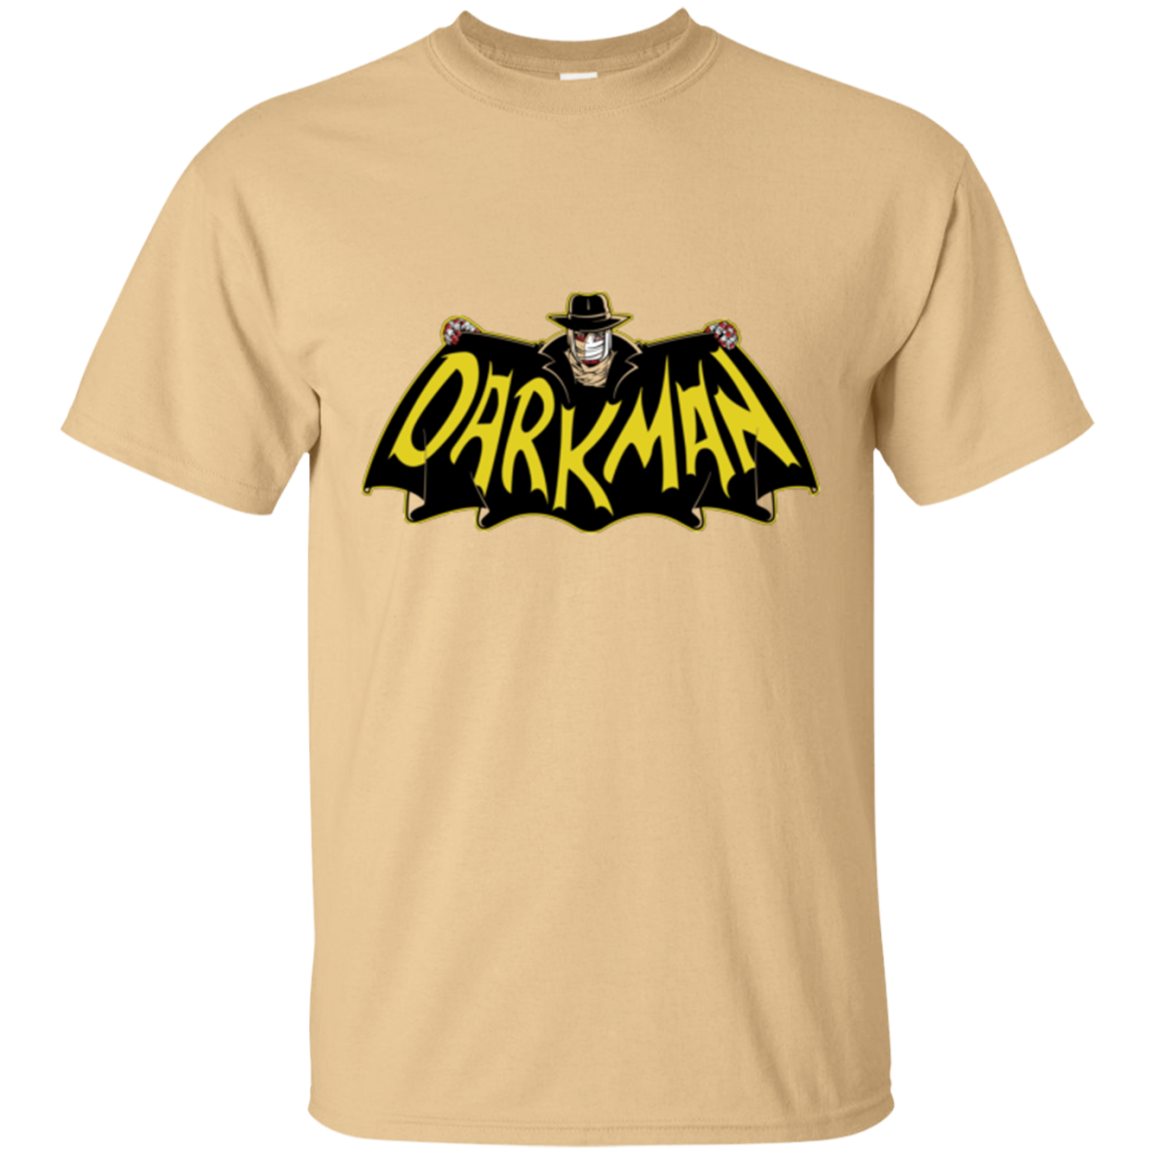 The Dark Man T-Shirt